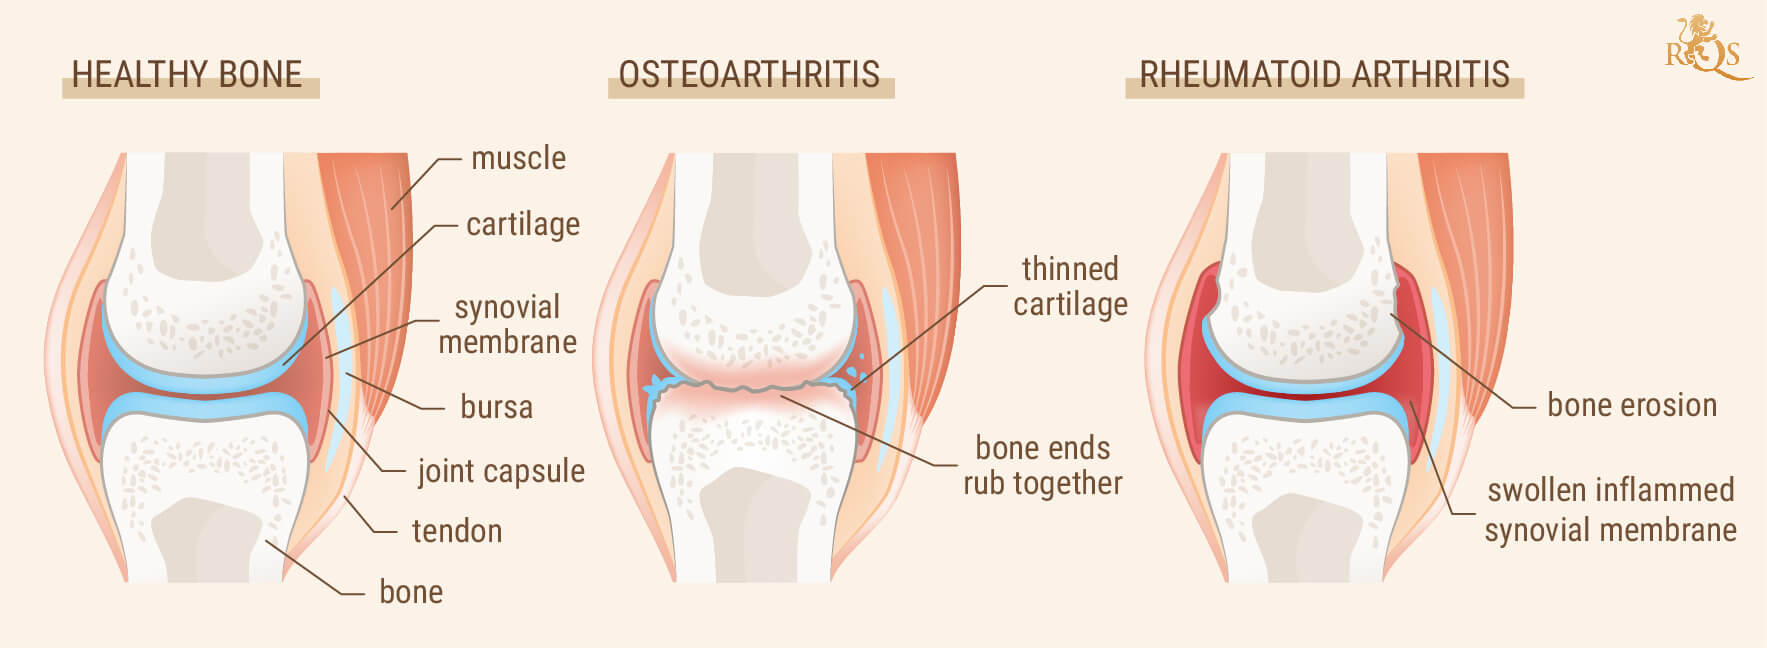 Are arthritis and rheumatism the same?